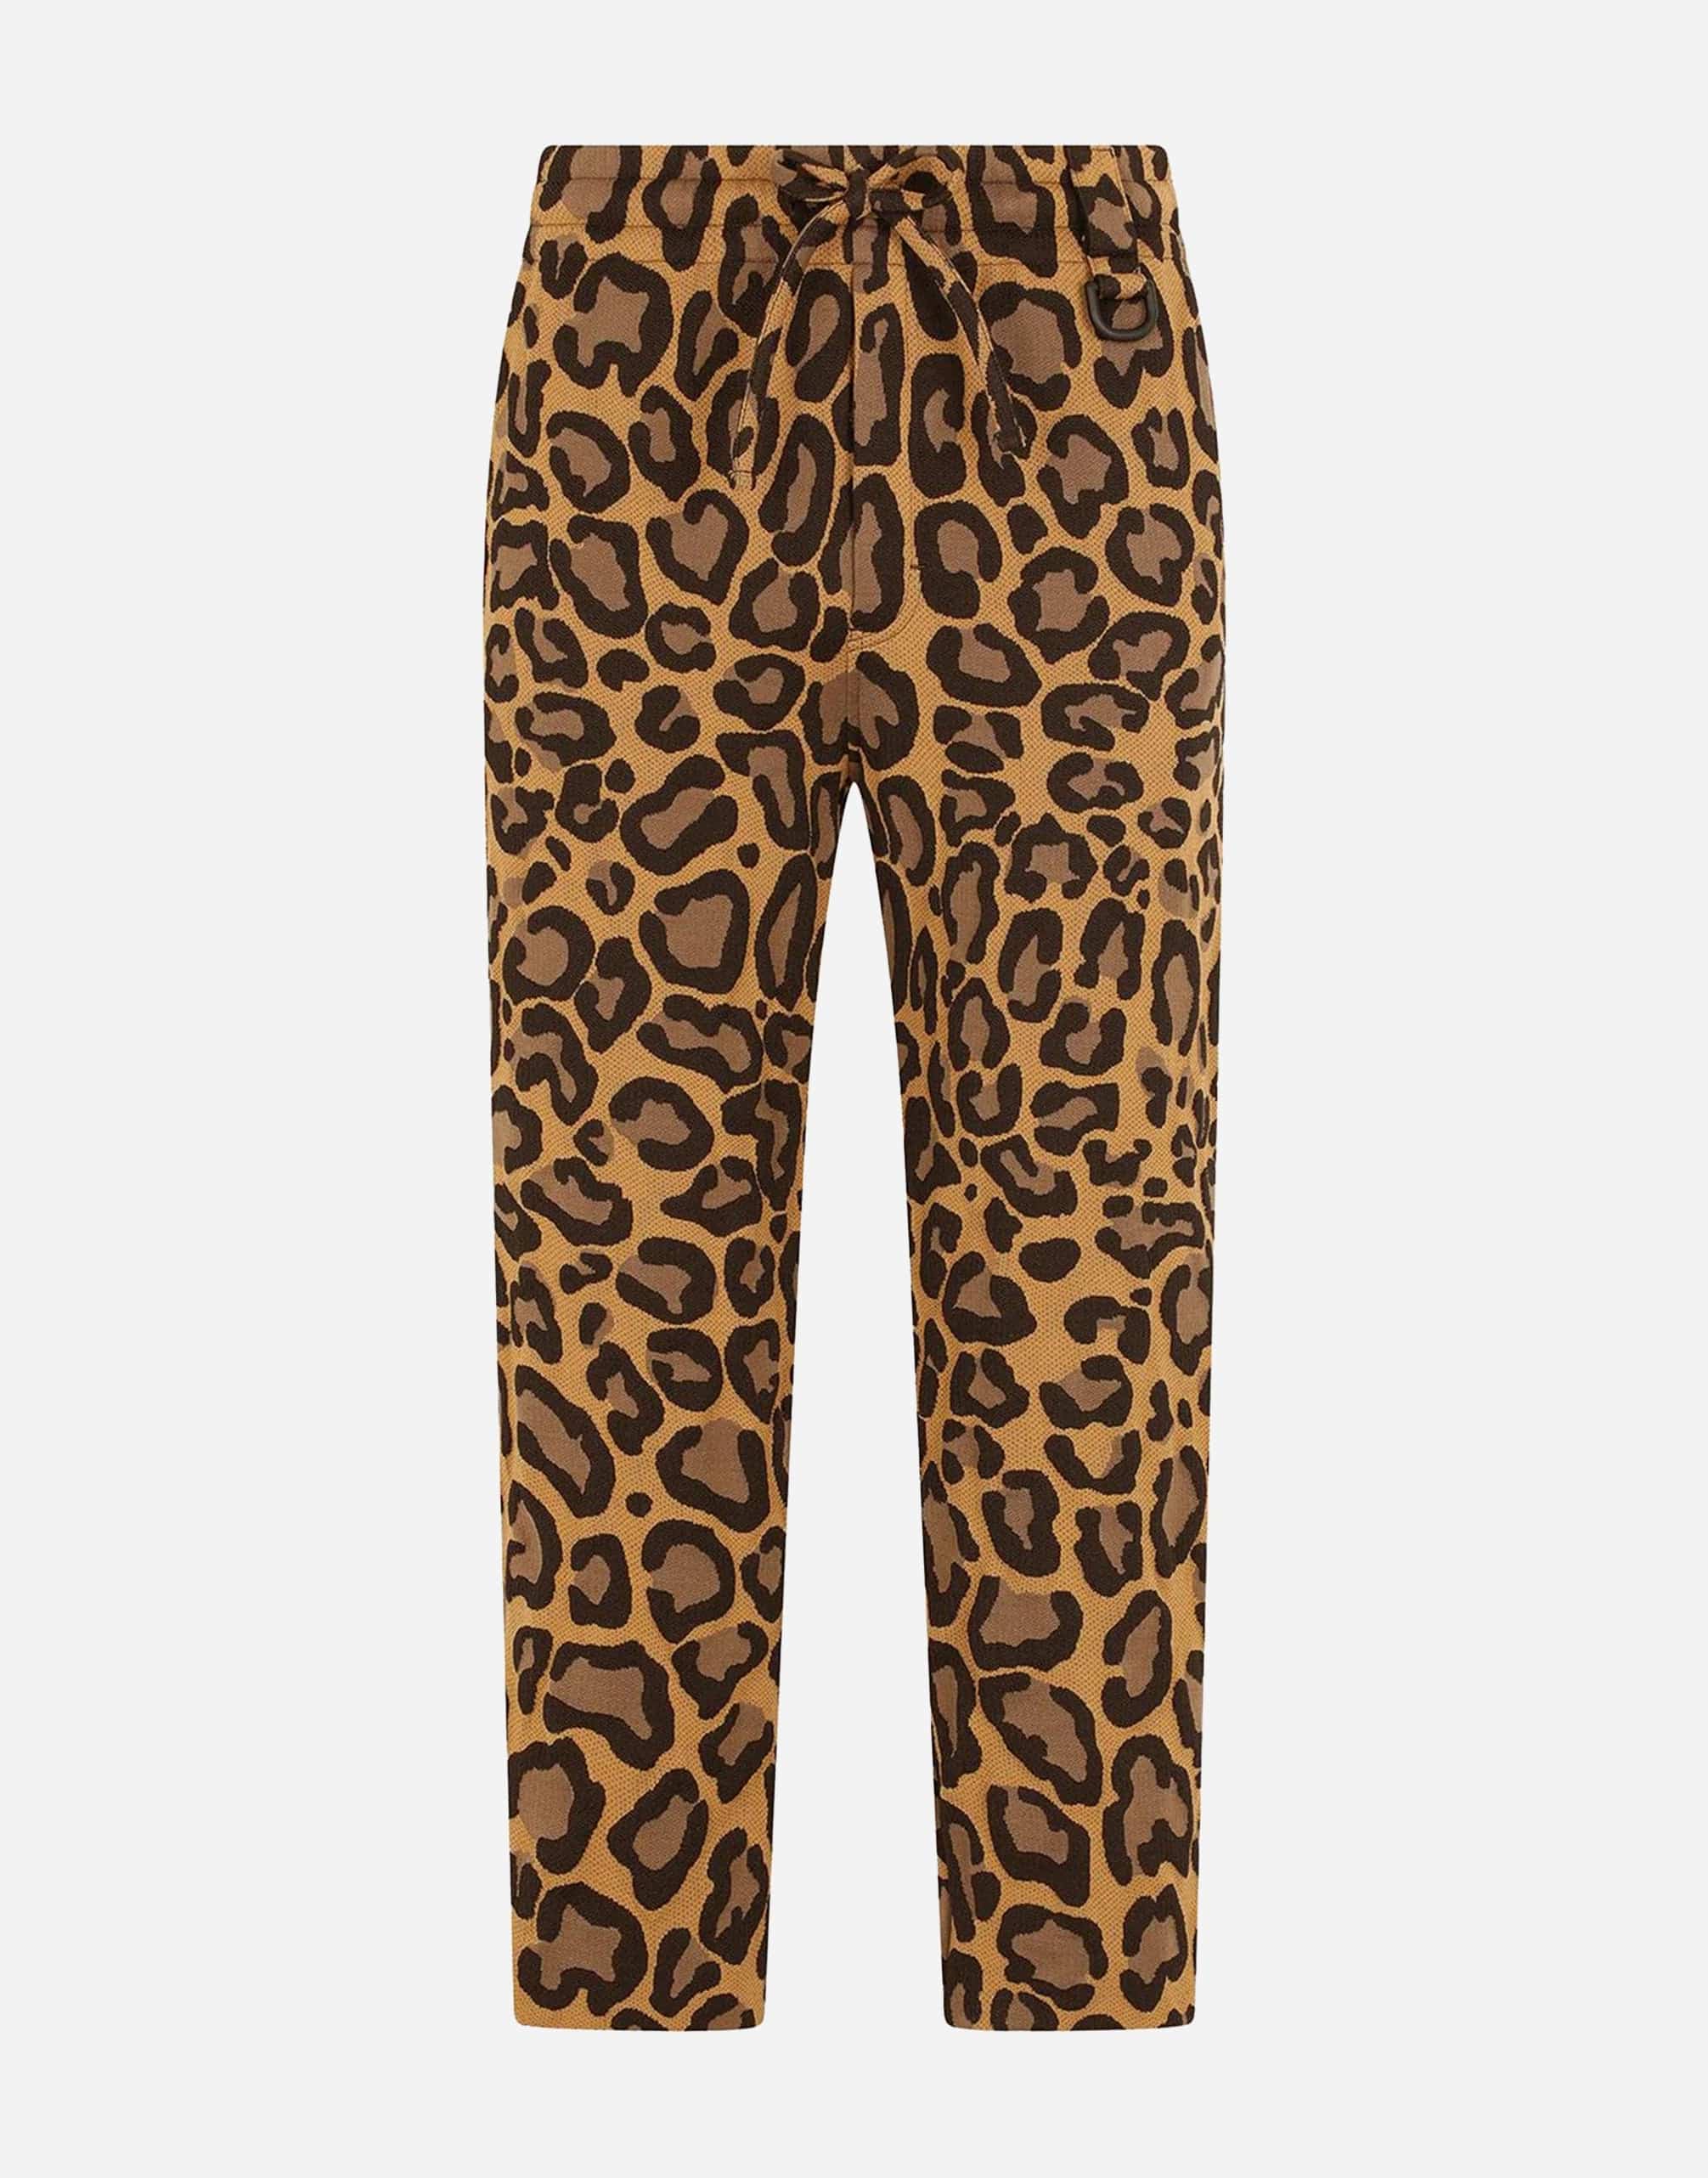 Jacquard Pantalones con diseño de leopardo